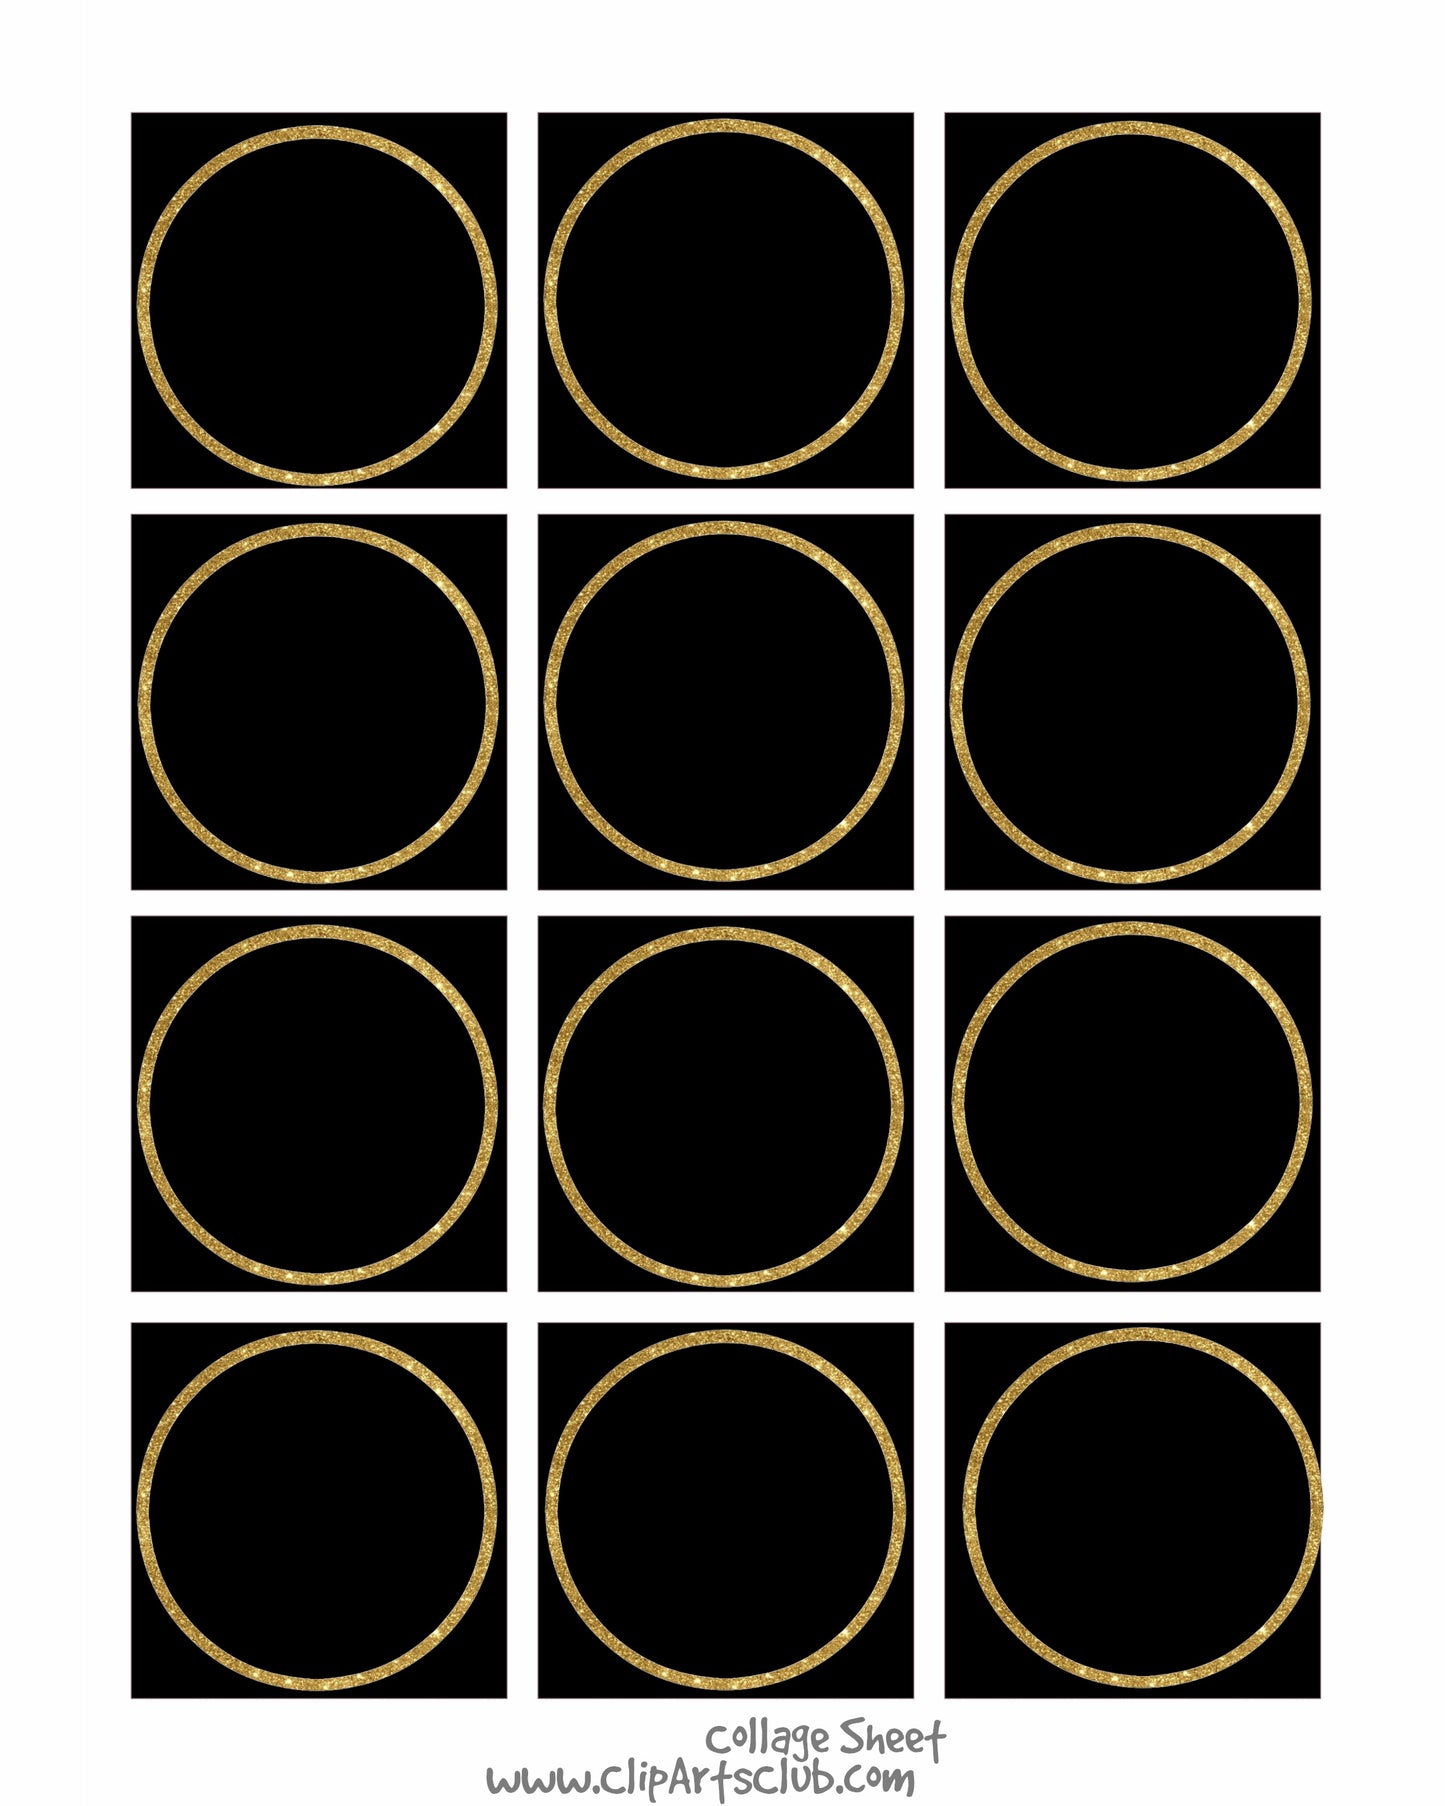 Black GOLD Glitter Circle Square Collage Sheet Blanks - Printable 8x10